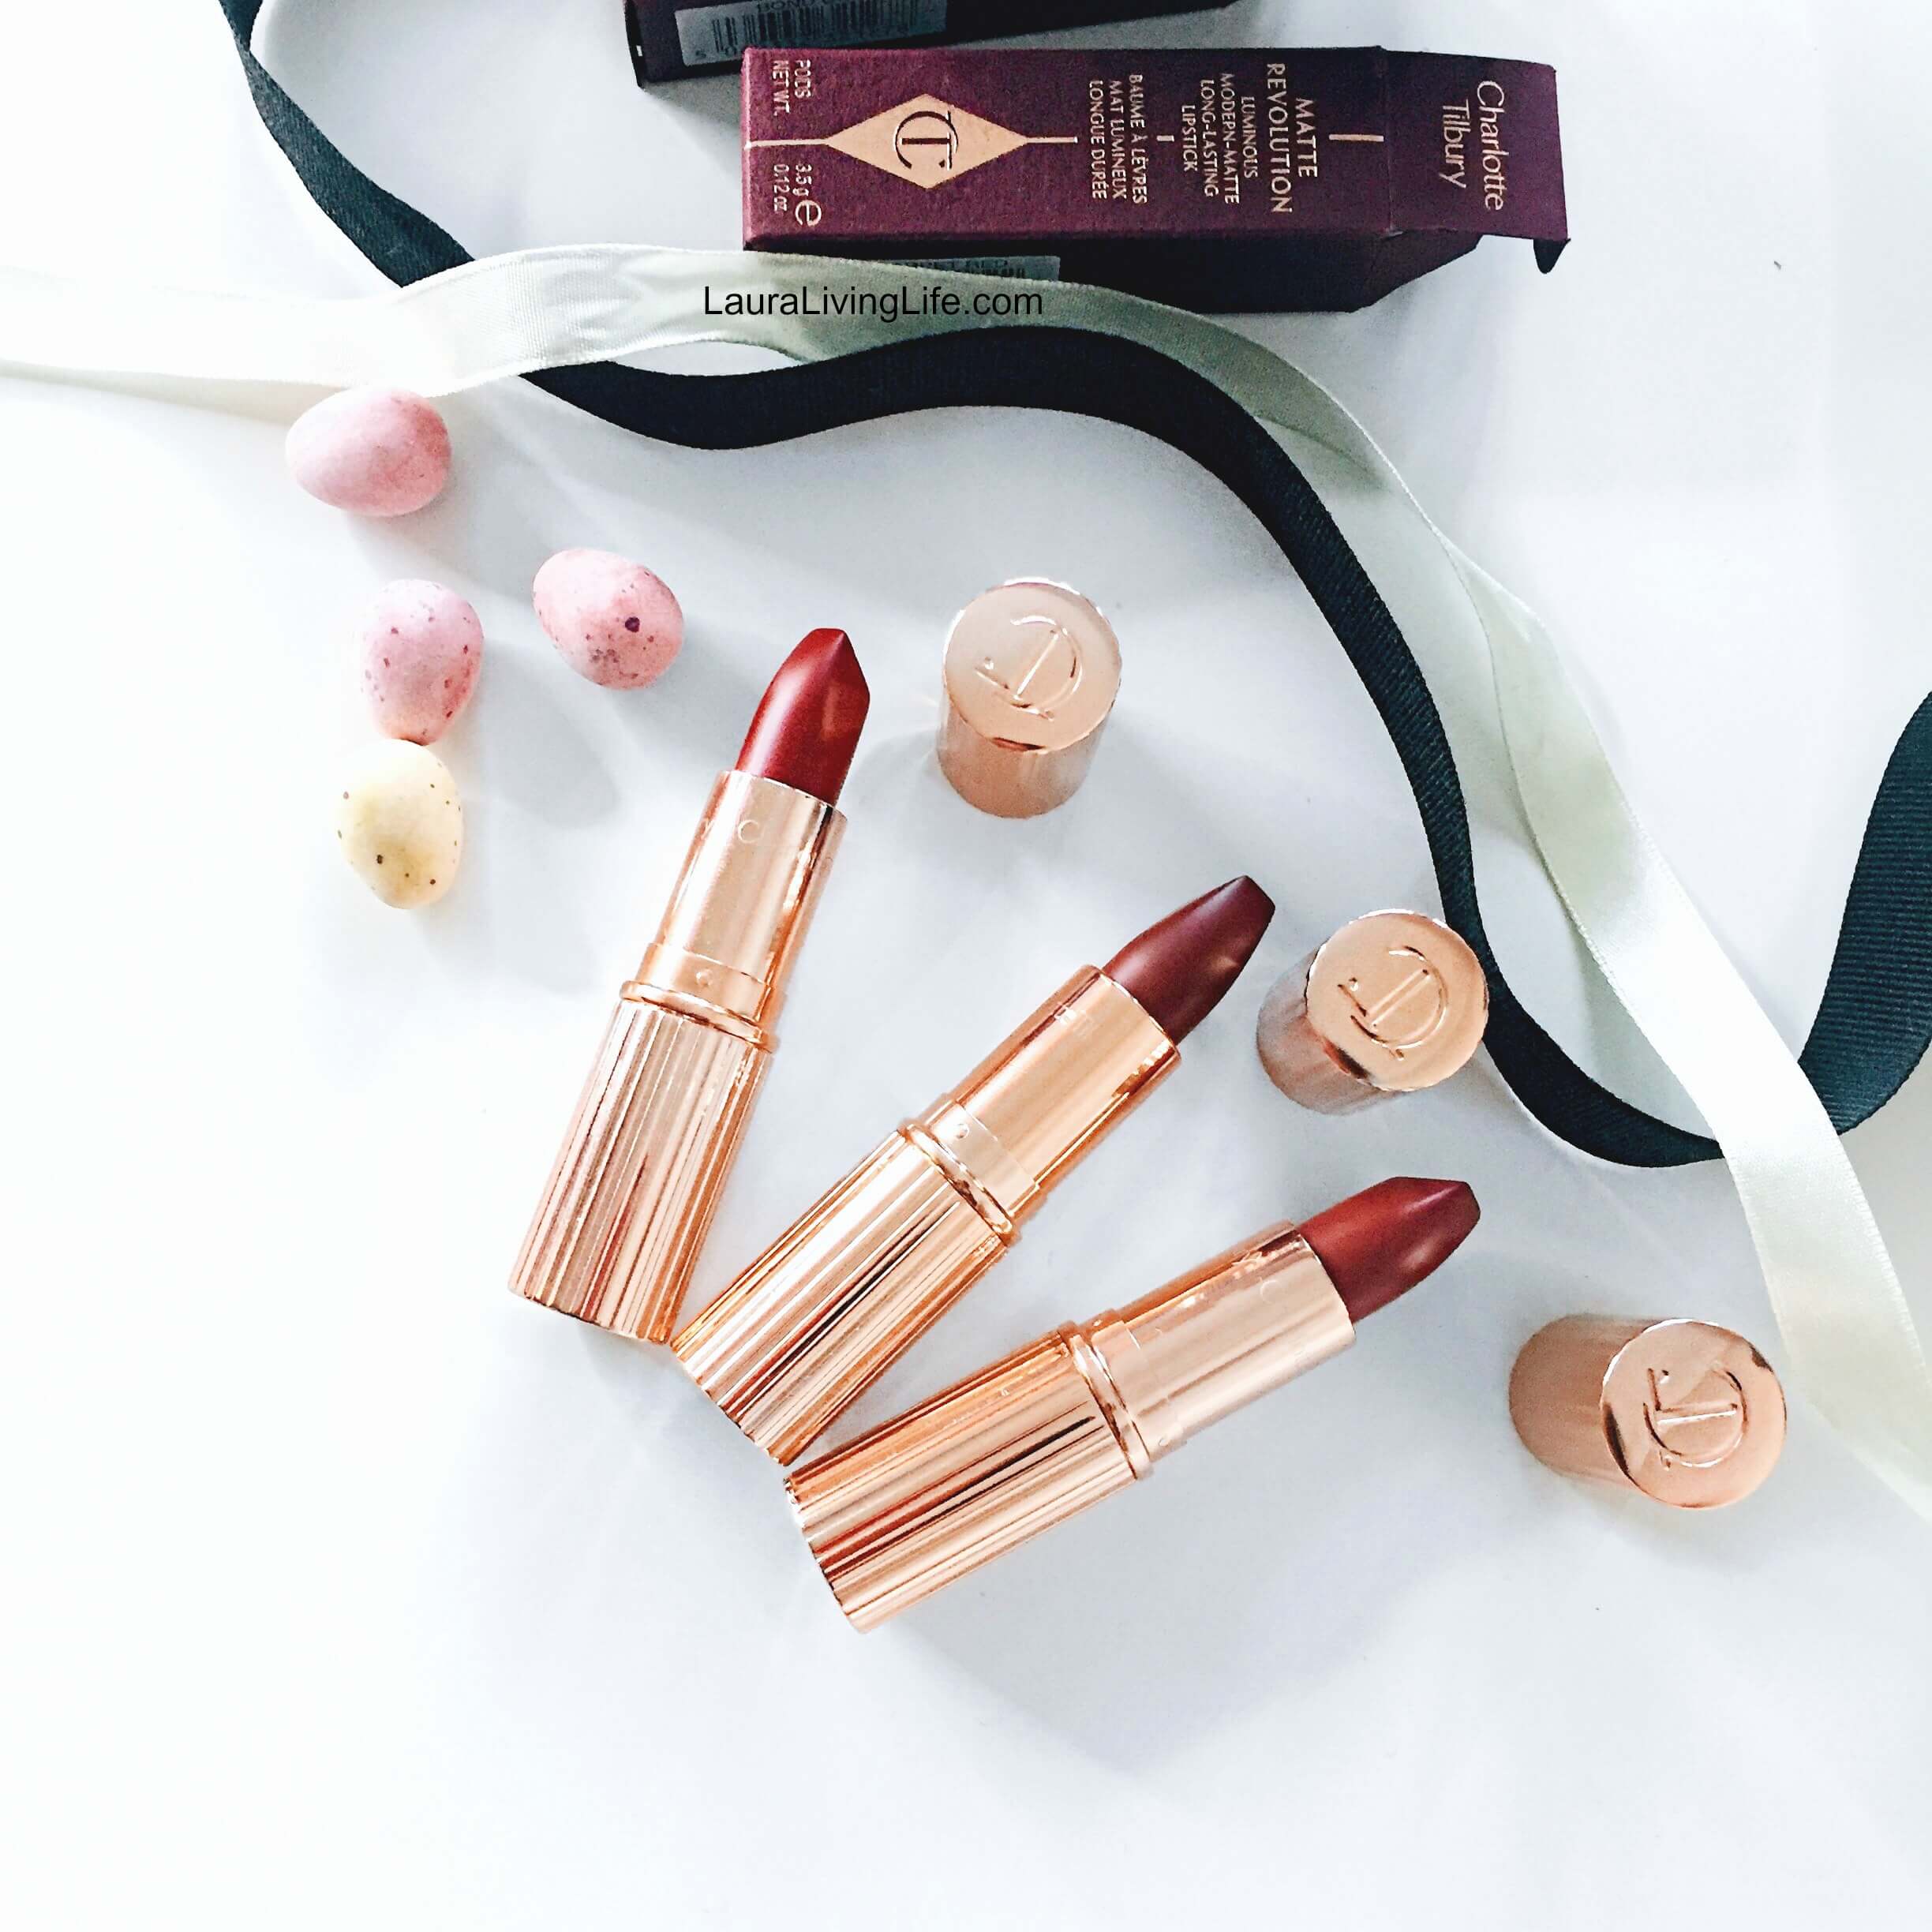 Charlotte Tilbury Matte Revolution lipsticks review and swatches lauralivinglife.com